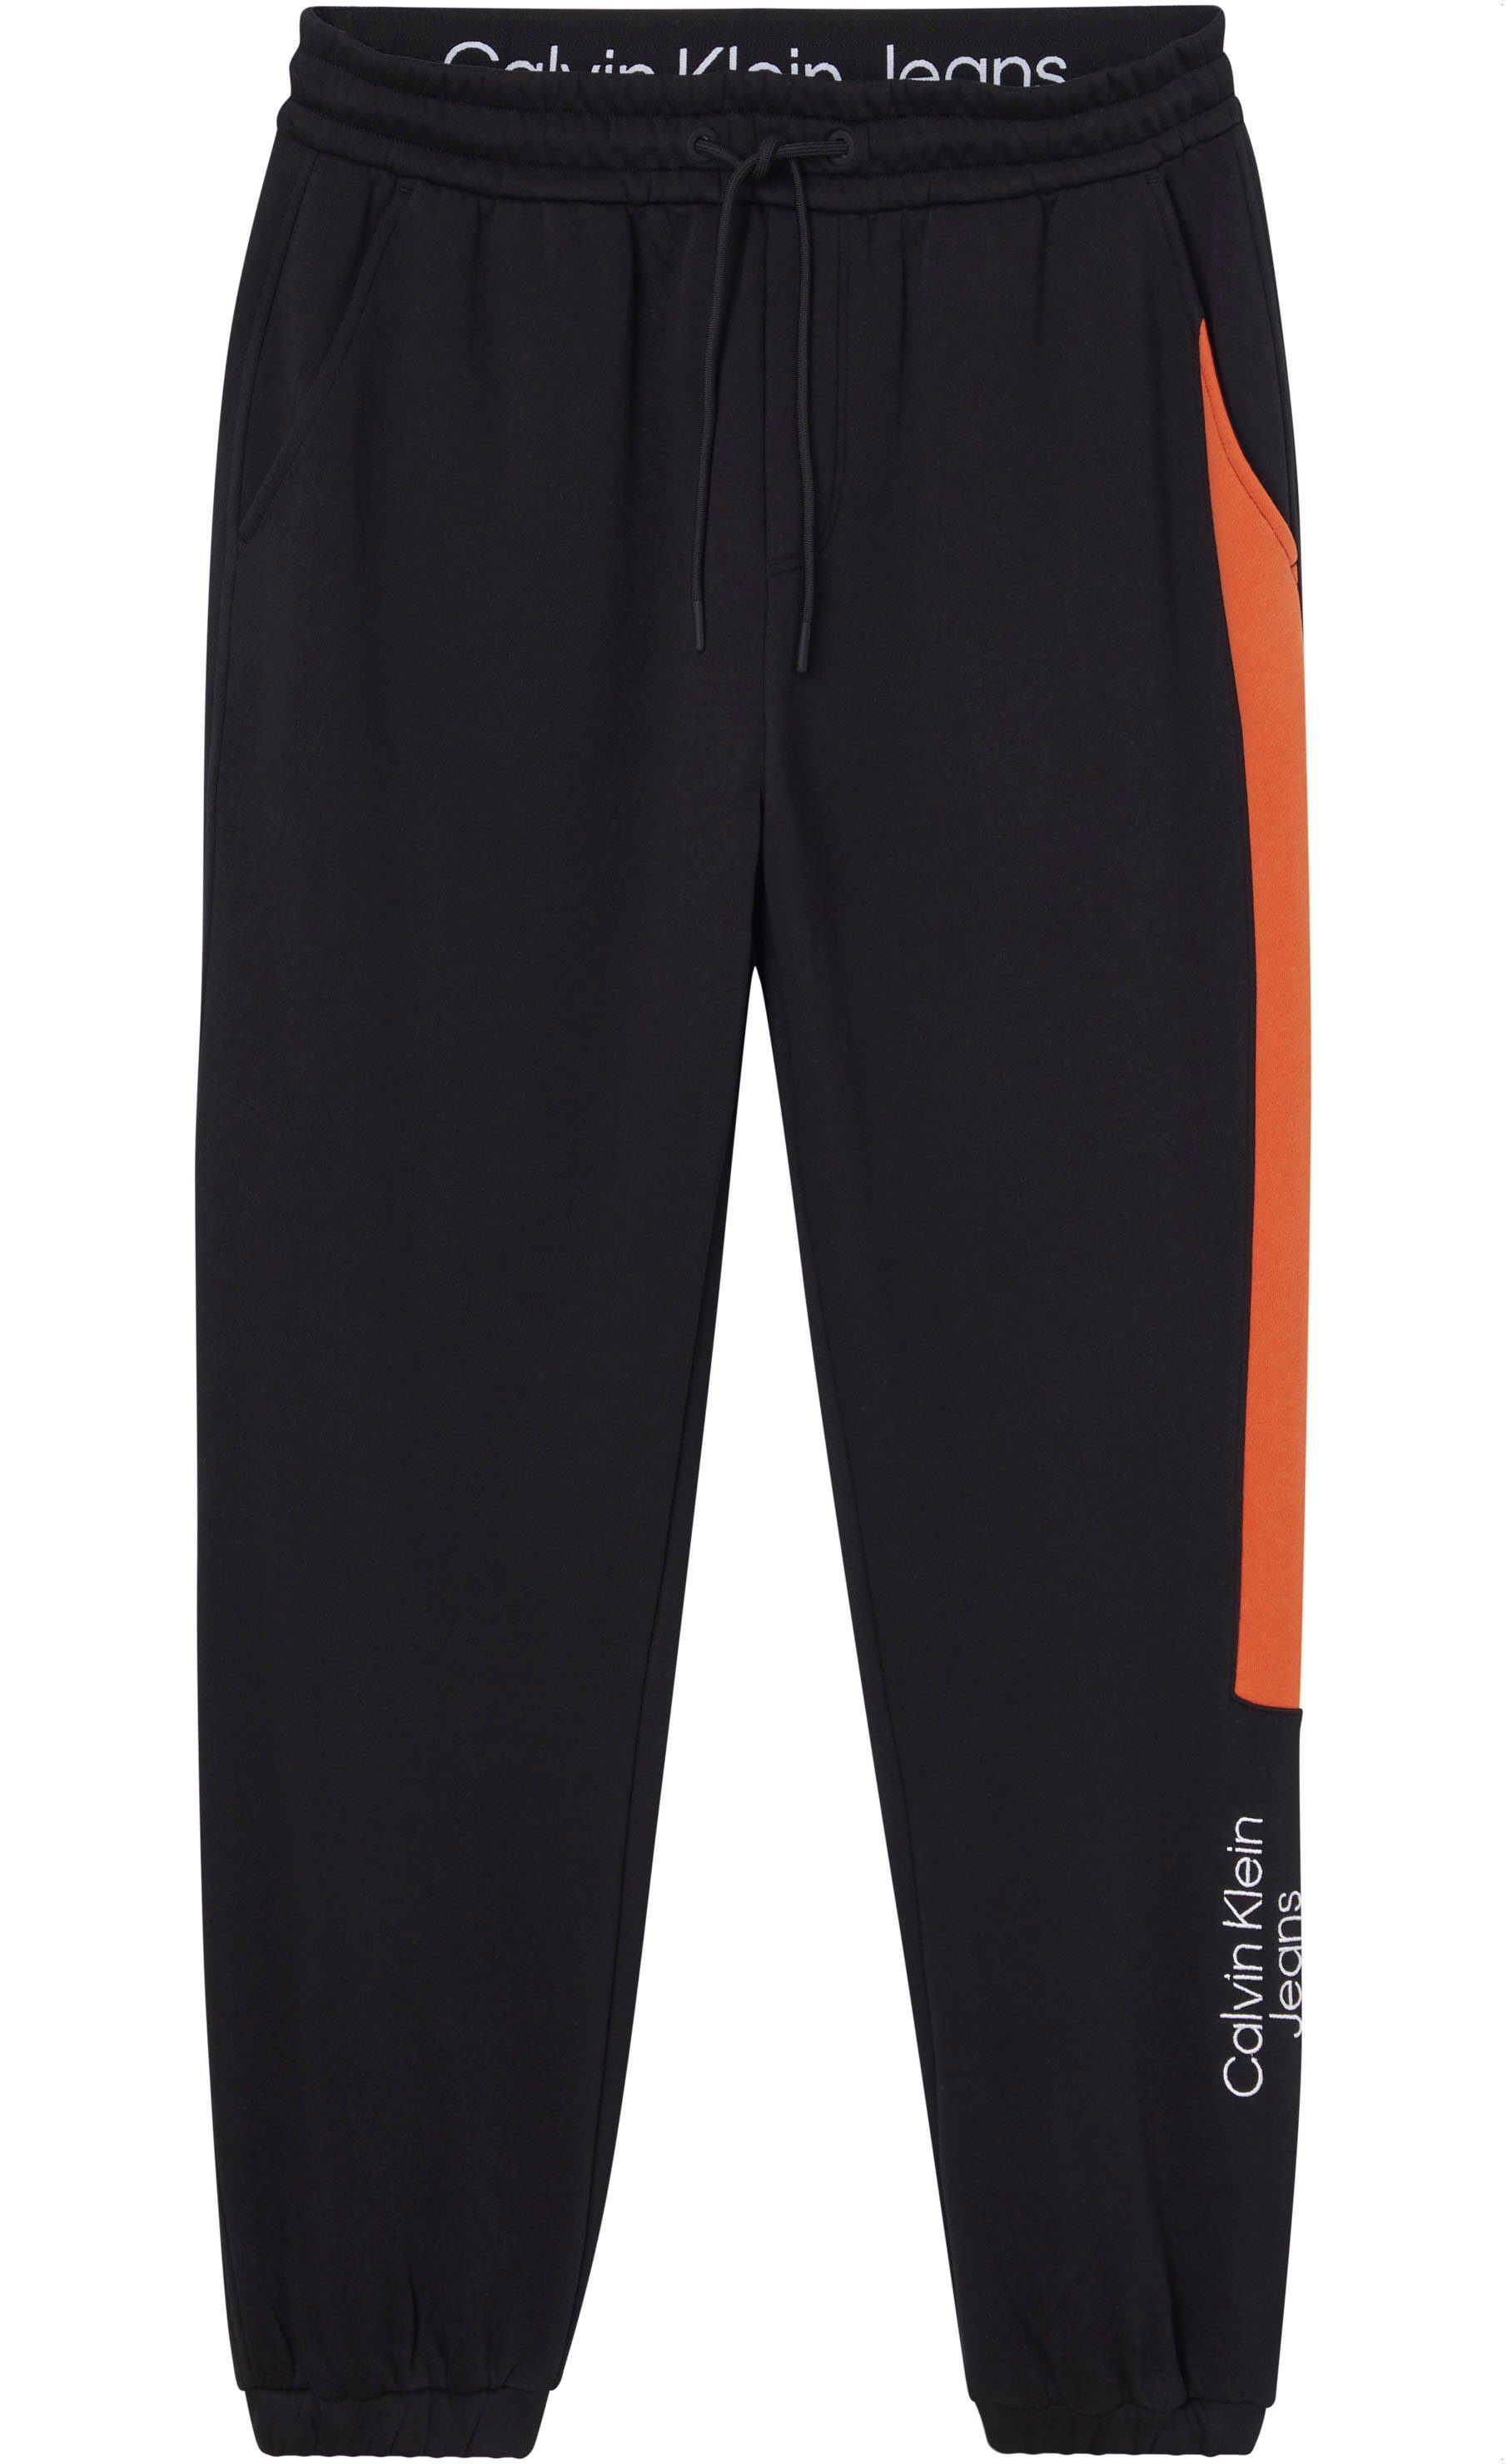 STACKED Klein COLORBLOCK Sweathose HWK / Orange (Packung) Jeans Black Calvin PANT Ck Coral